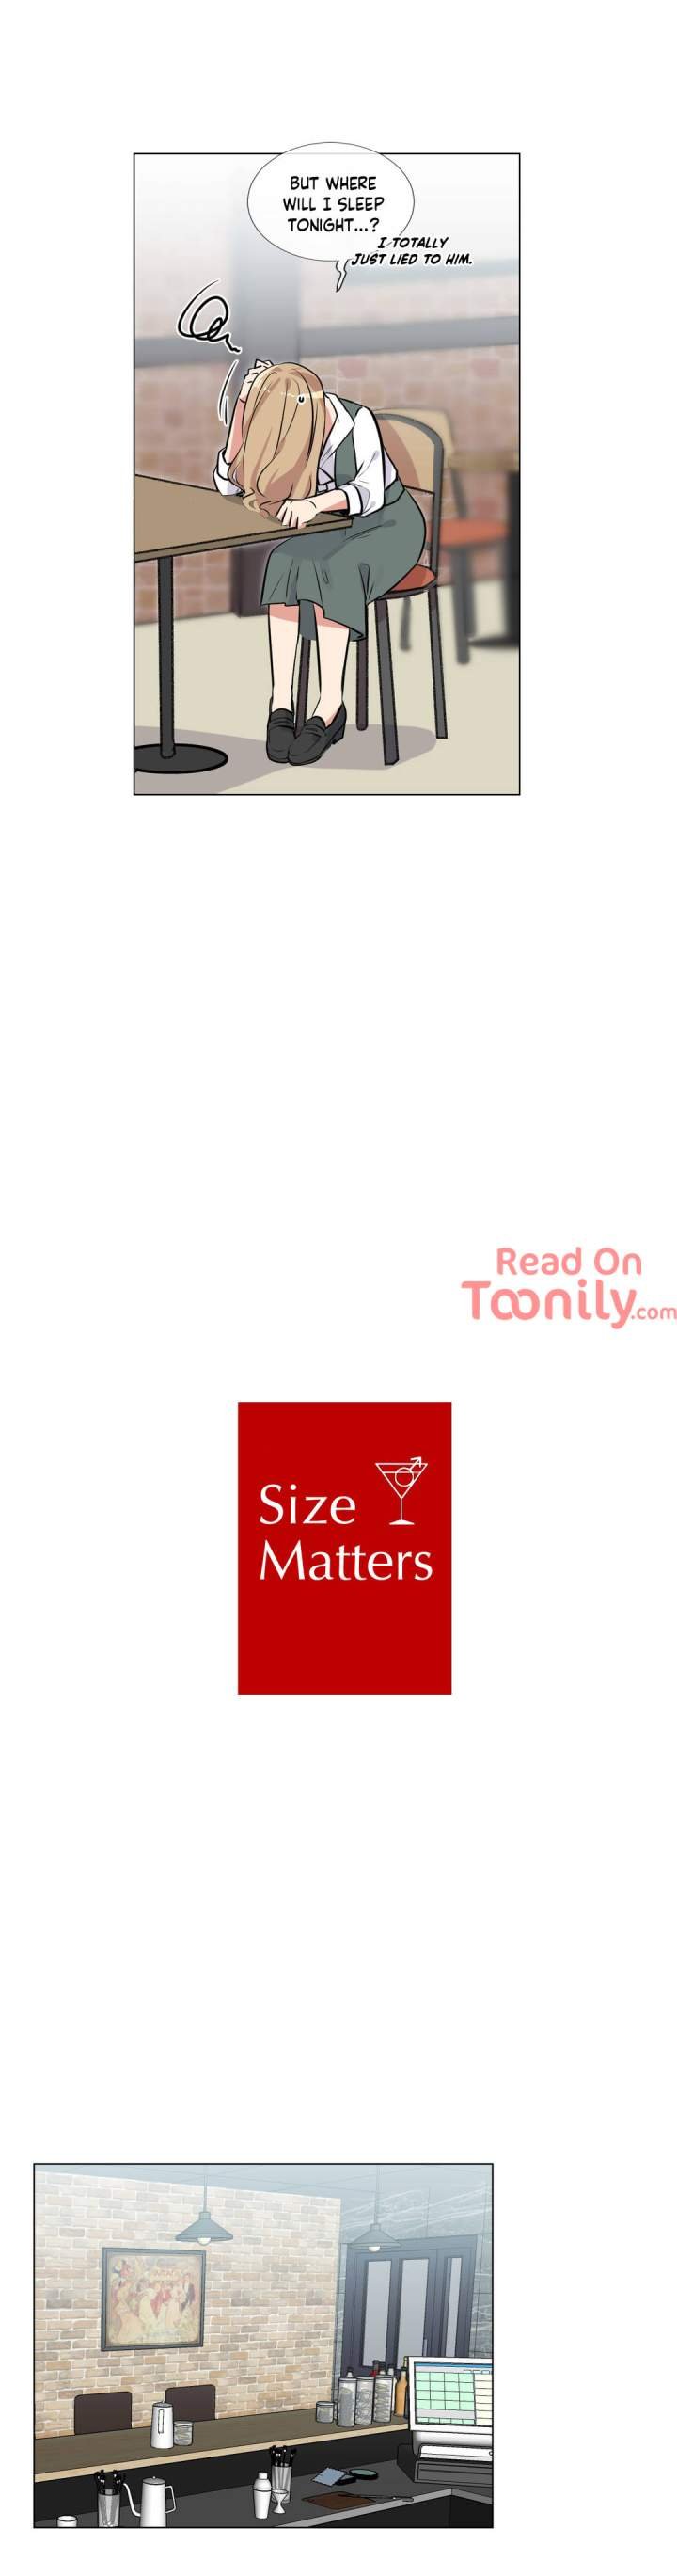 size-matters-chap-18-16